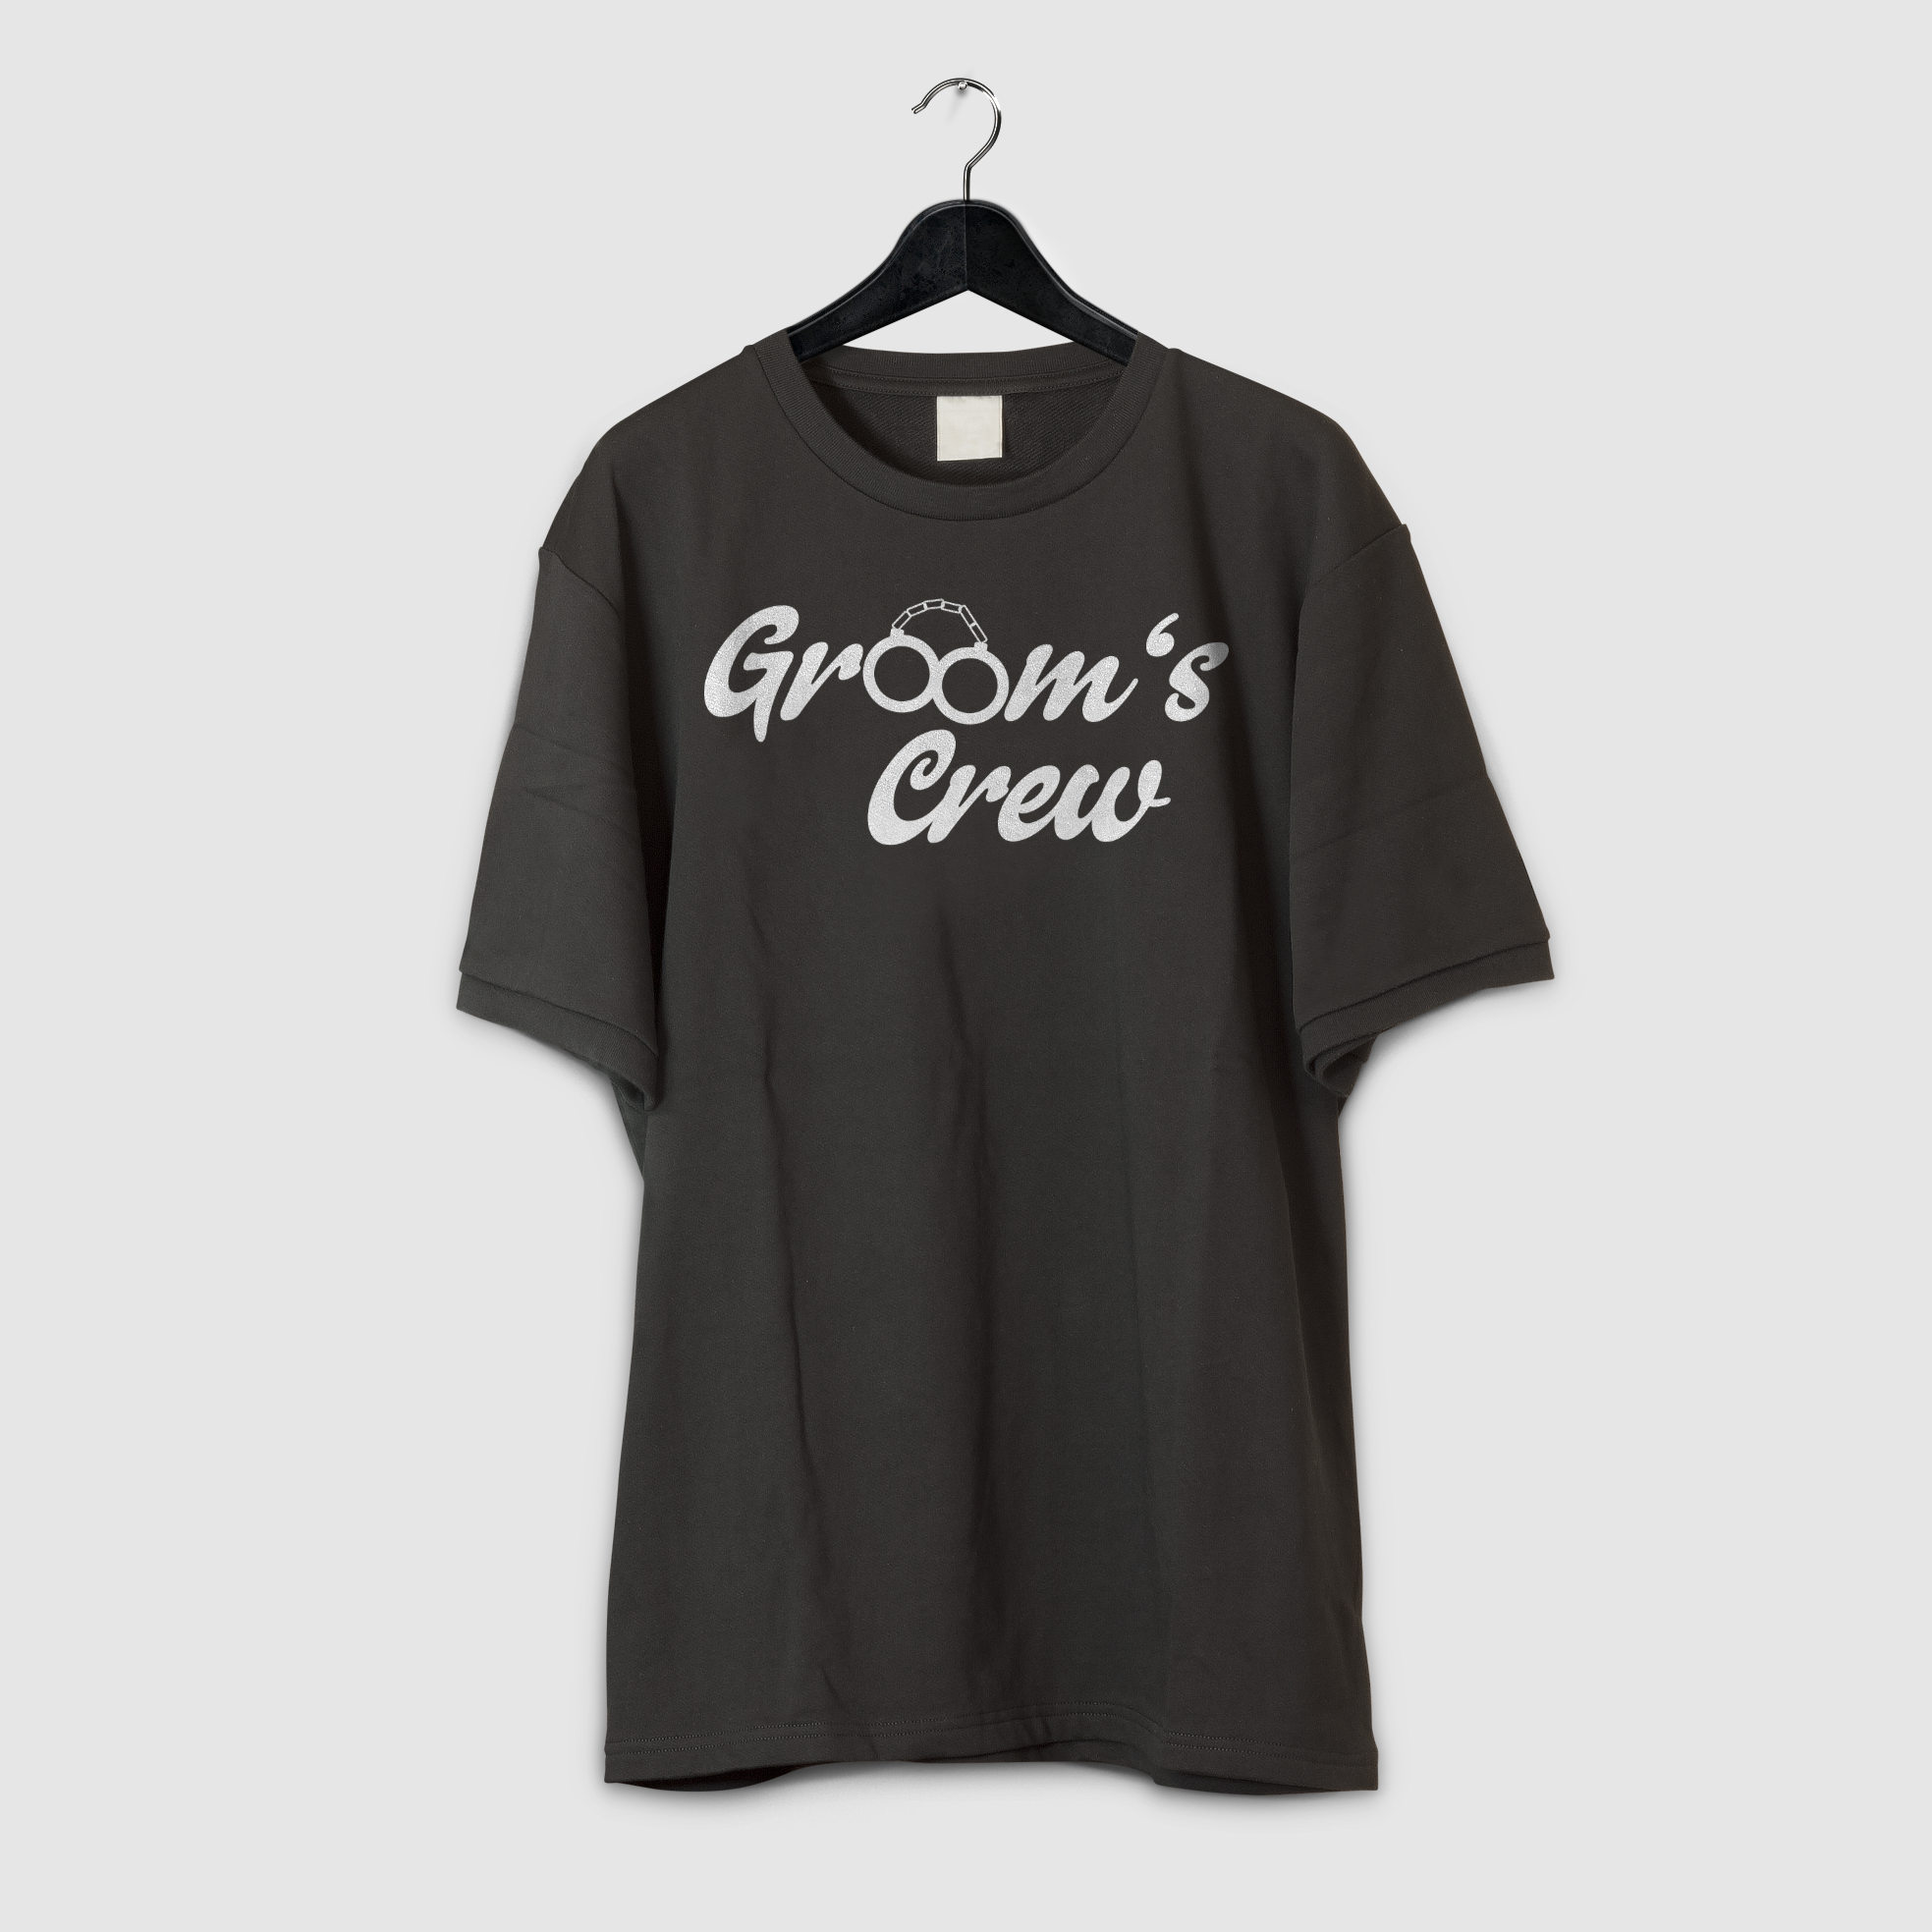 Grooms Crew Shirt